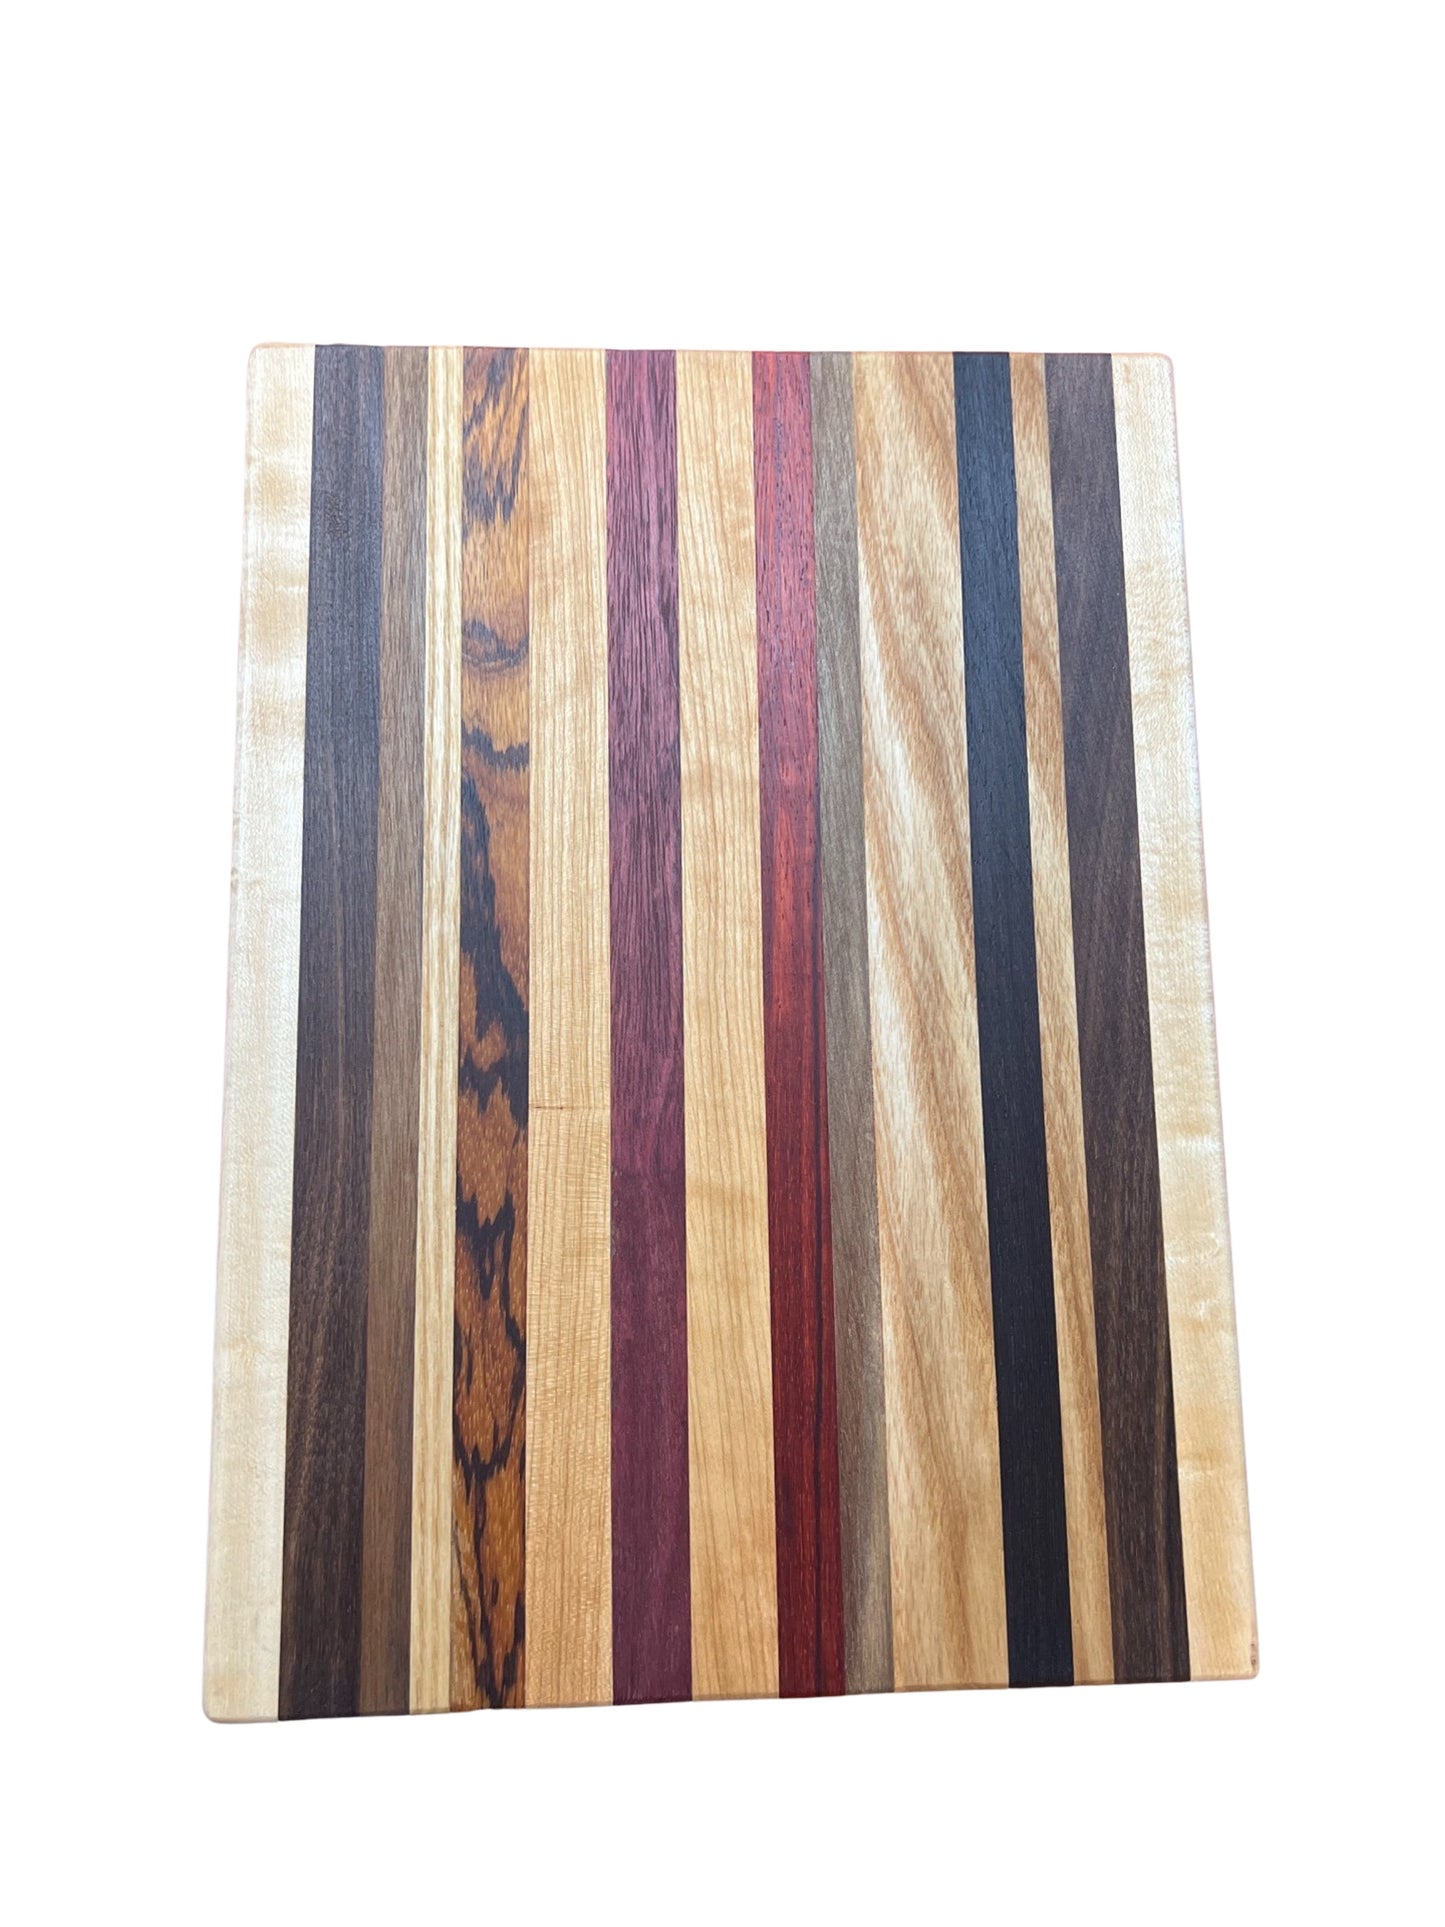 Wood cutting Board by OWL Creations